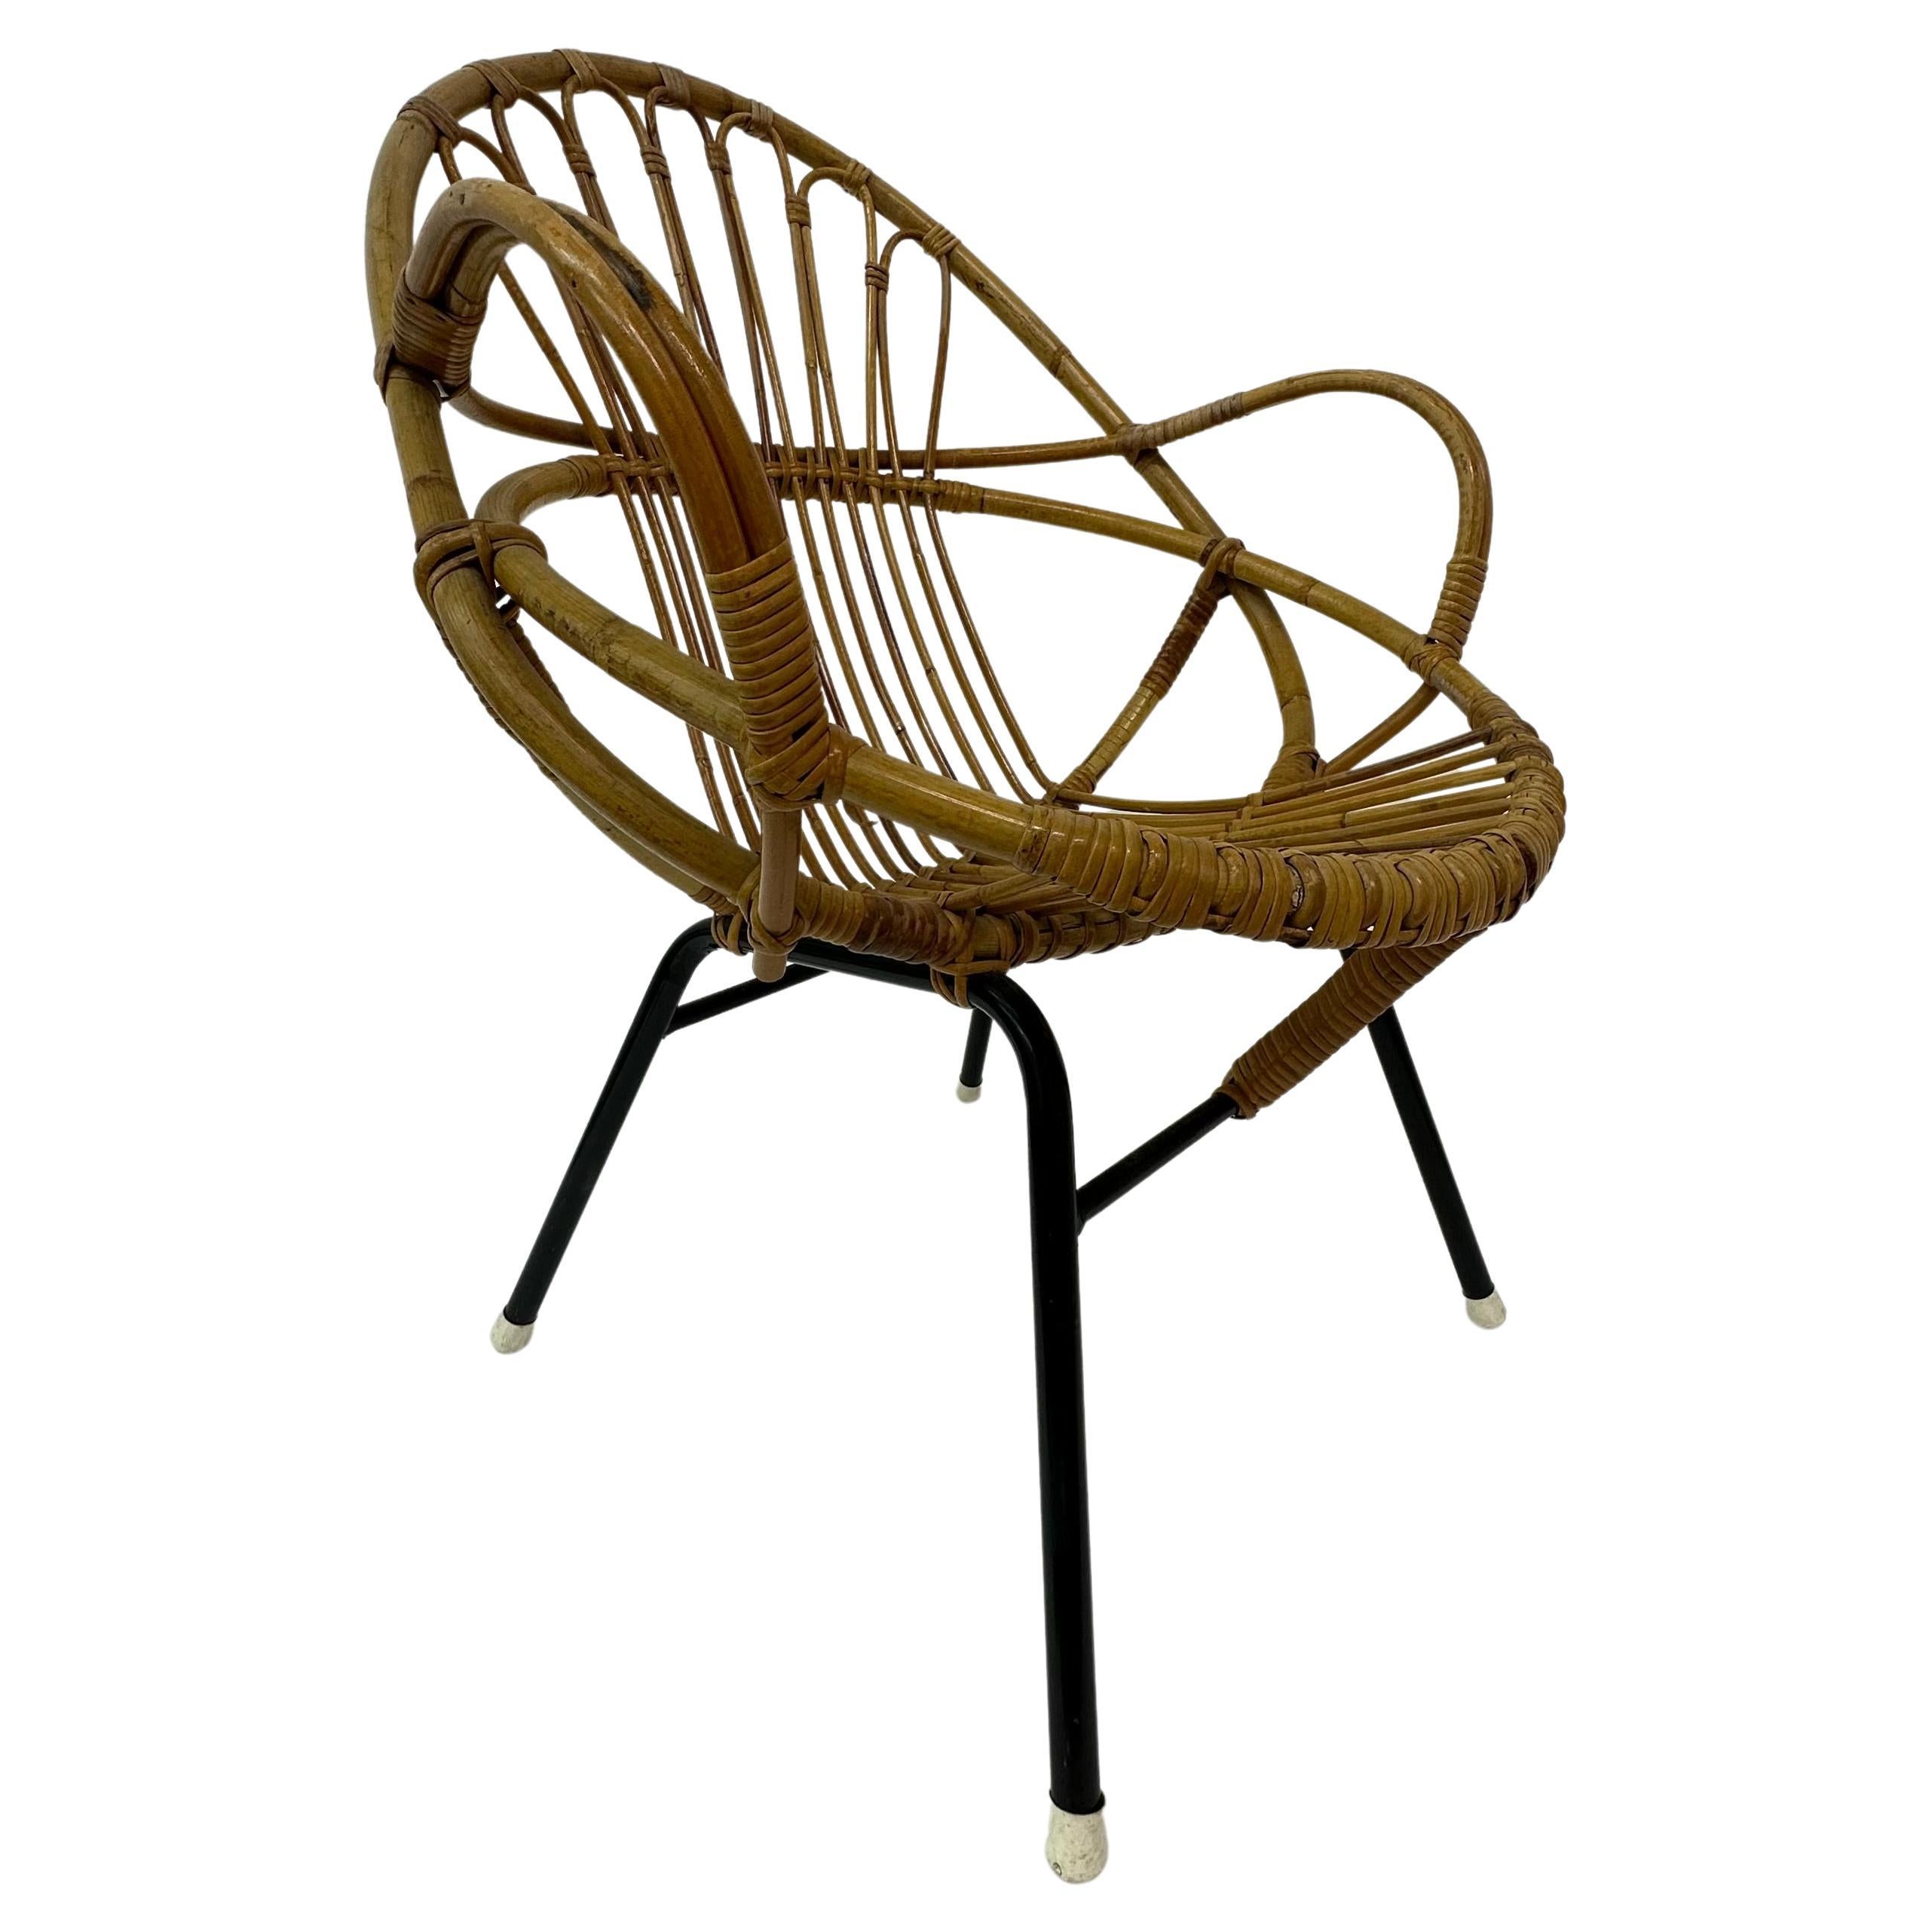 Rohe Noordwolde rattan lounge chair, 1950’s